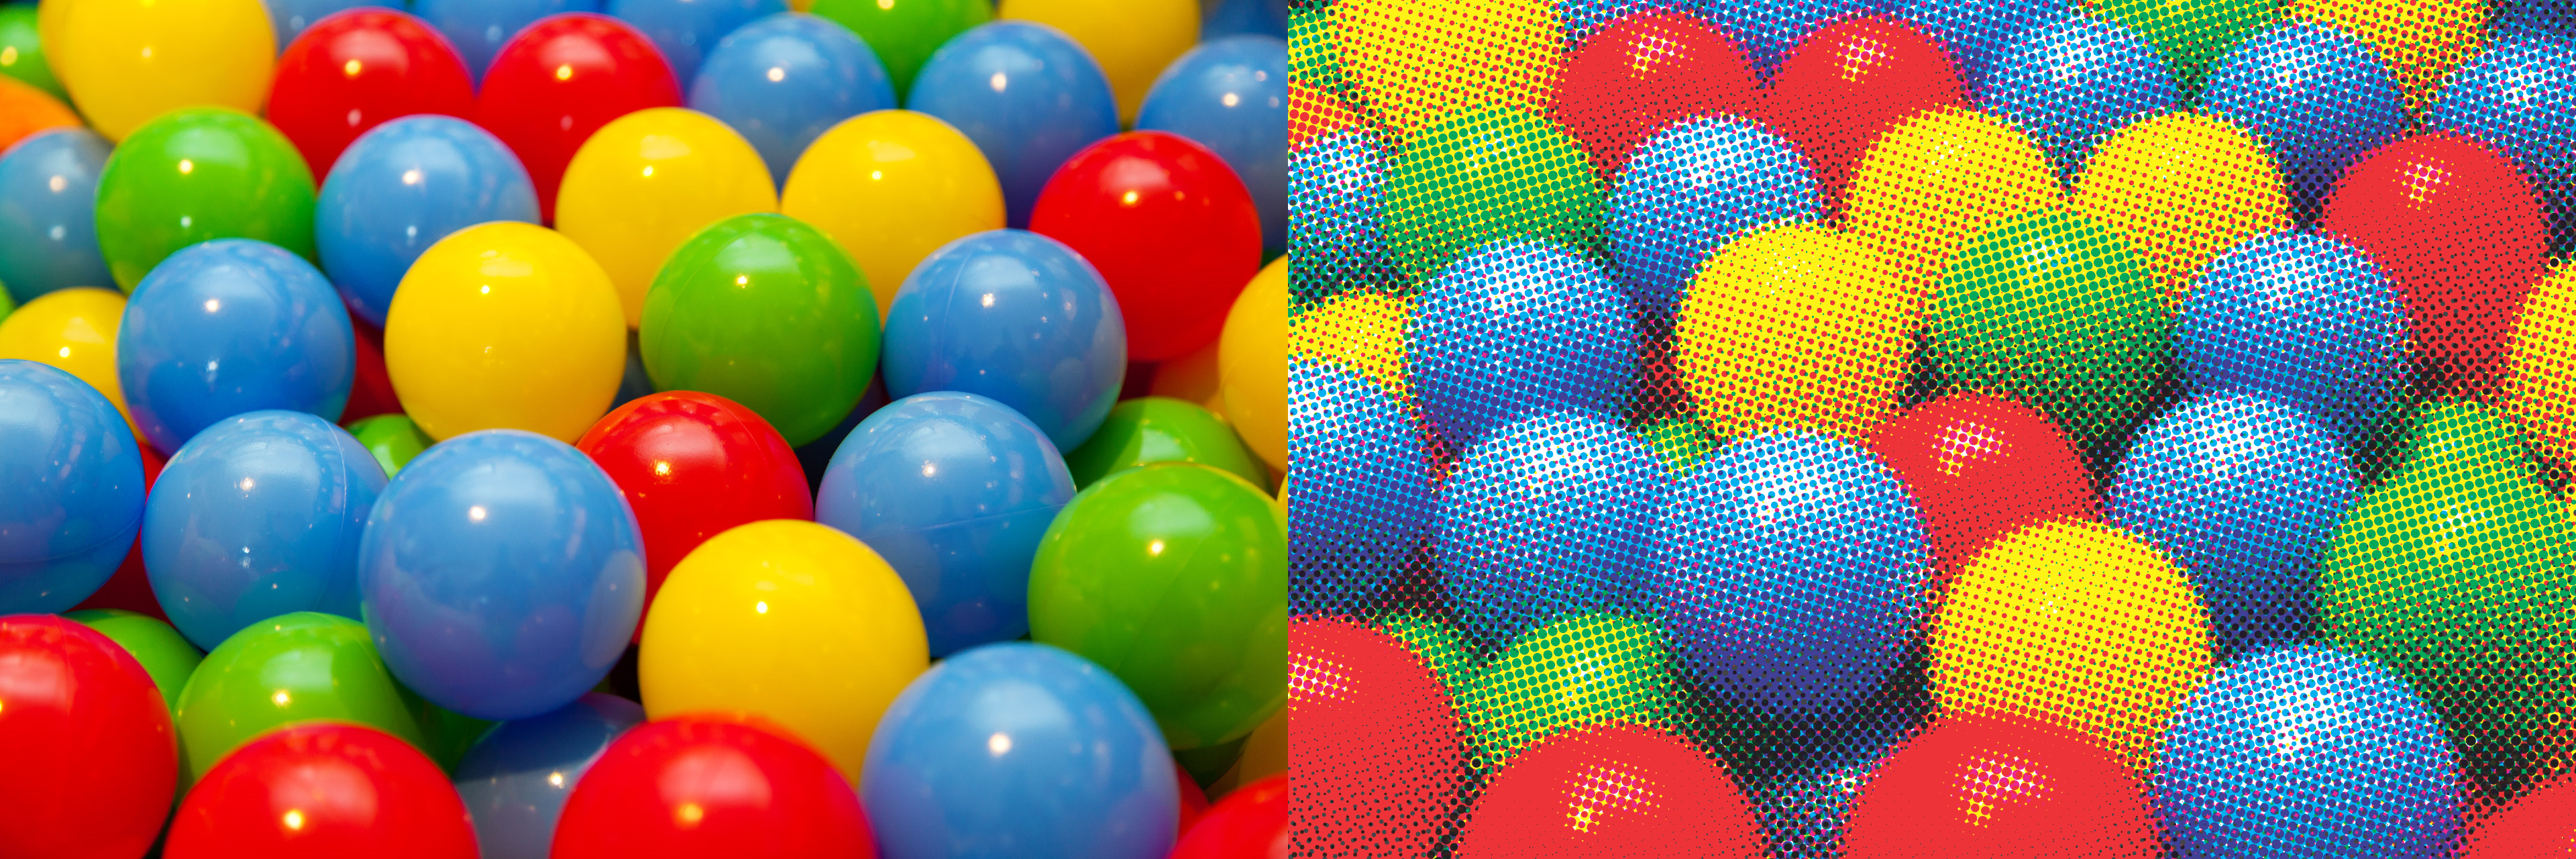 Colorful Play Balls